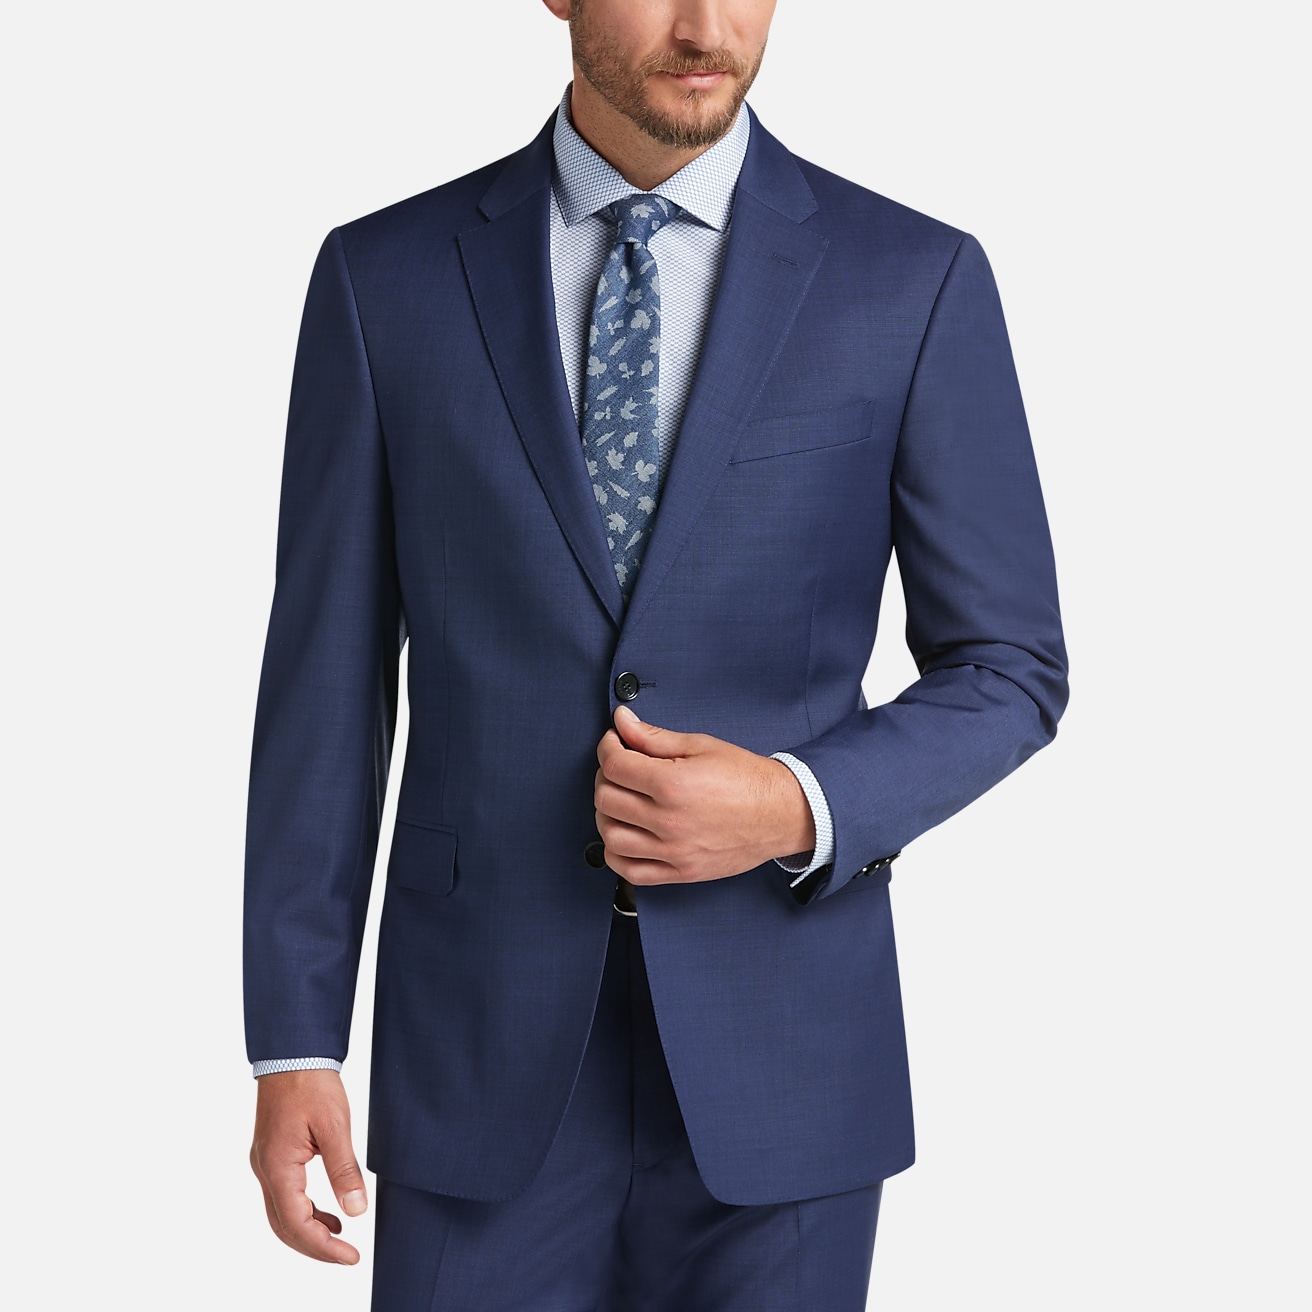 Tommy Hilfiger Slim Fit Suit, All Sale